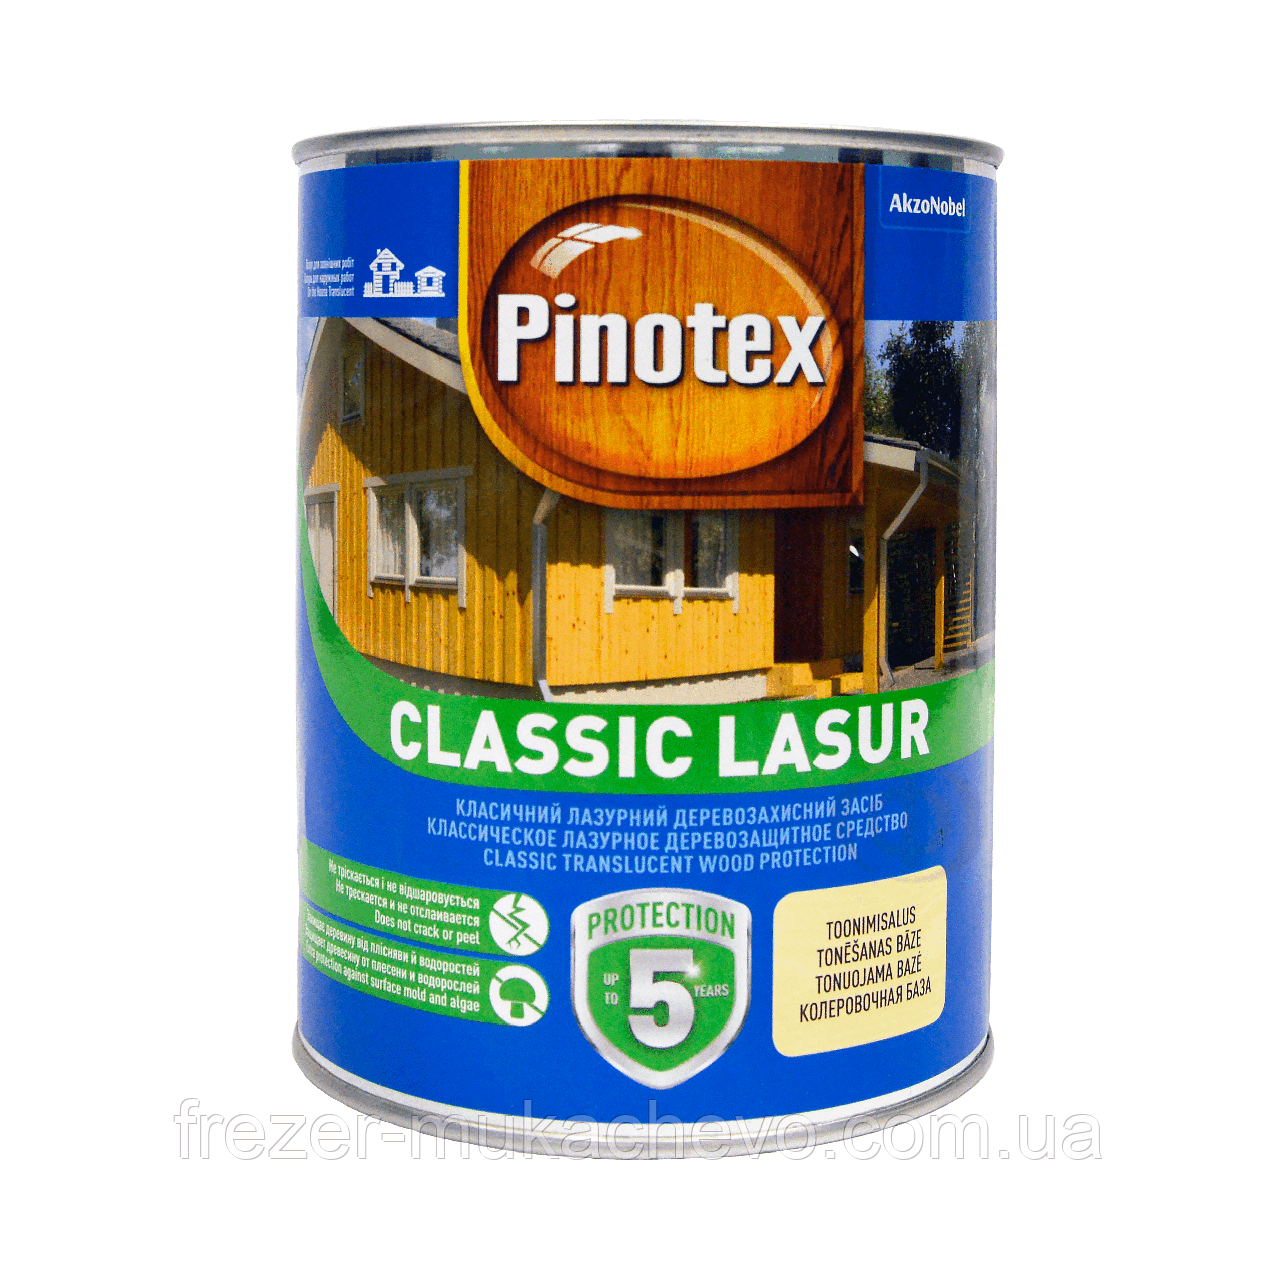 Pinotex Classic орегон 1 л